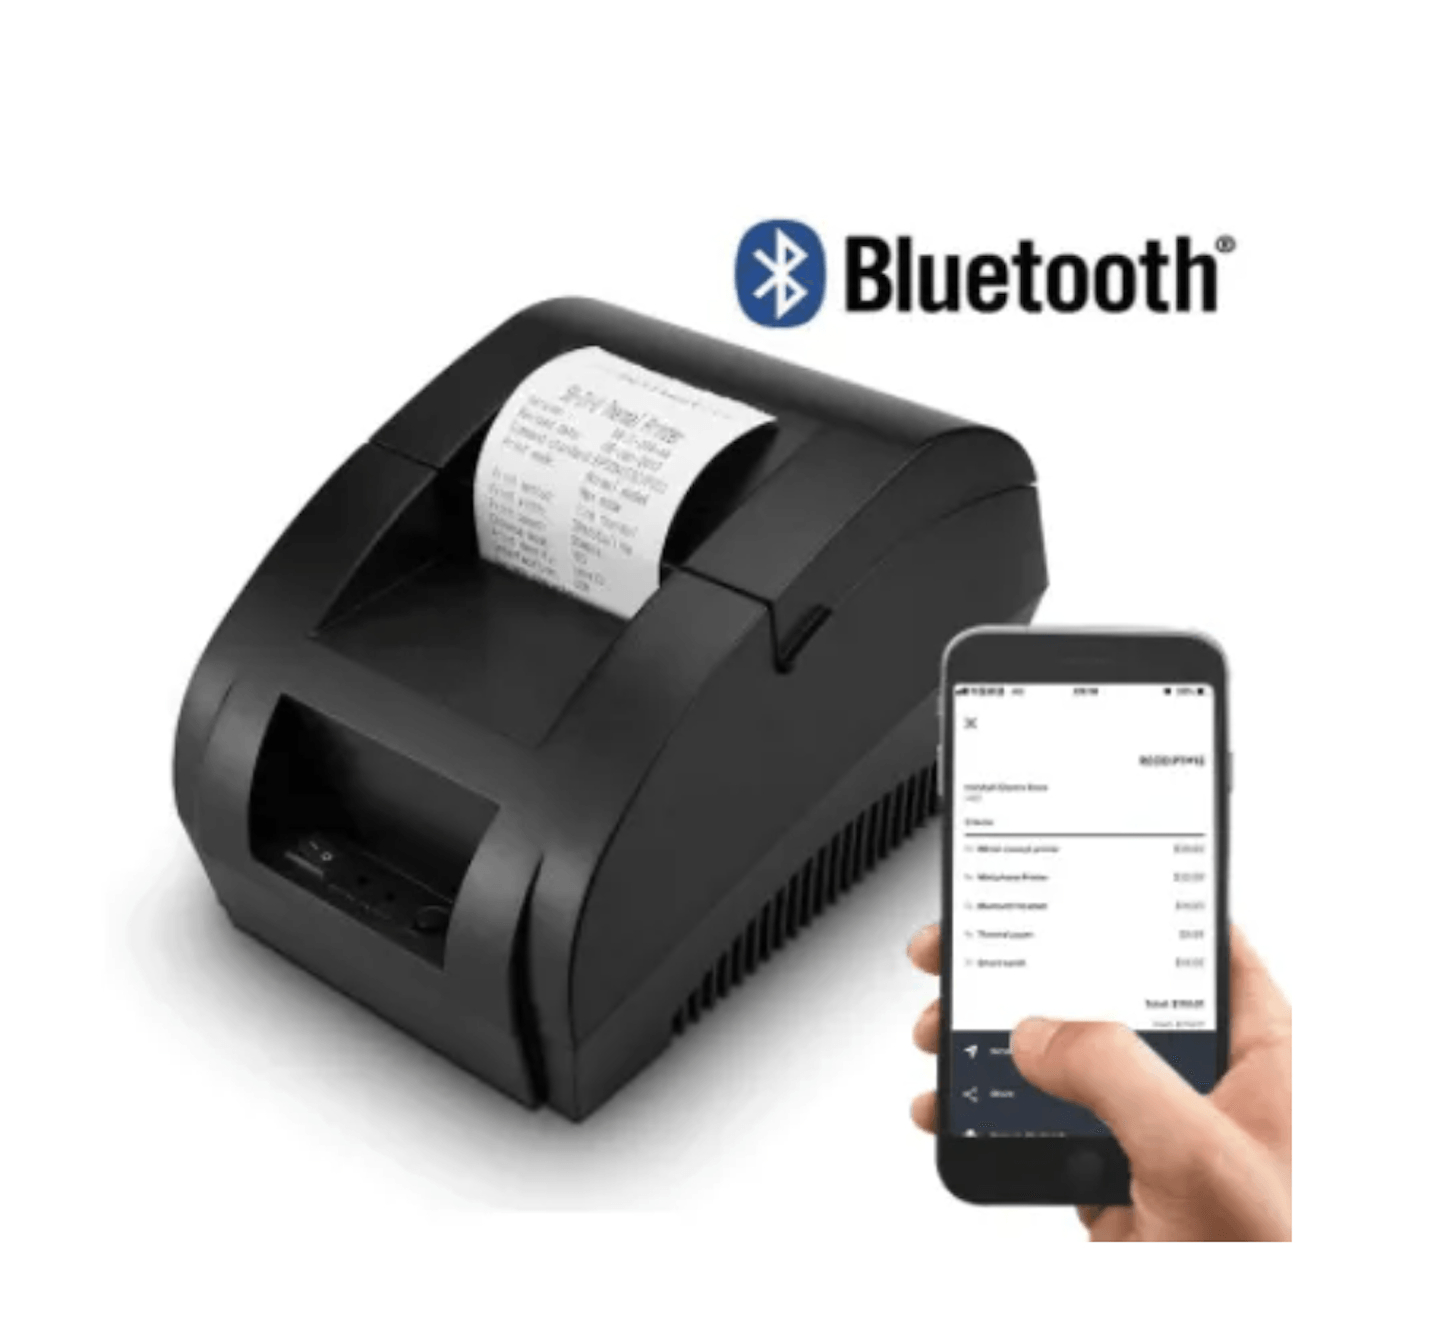 Bluetooth Printer Picture